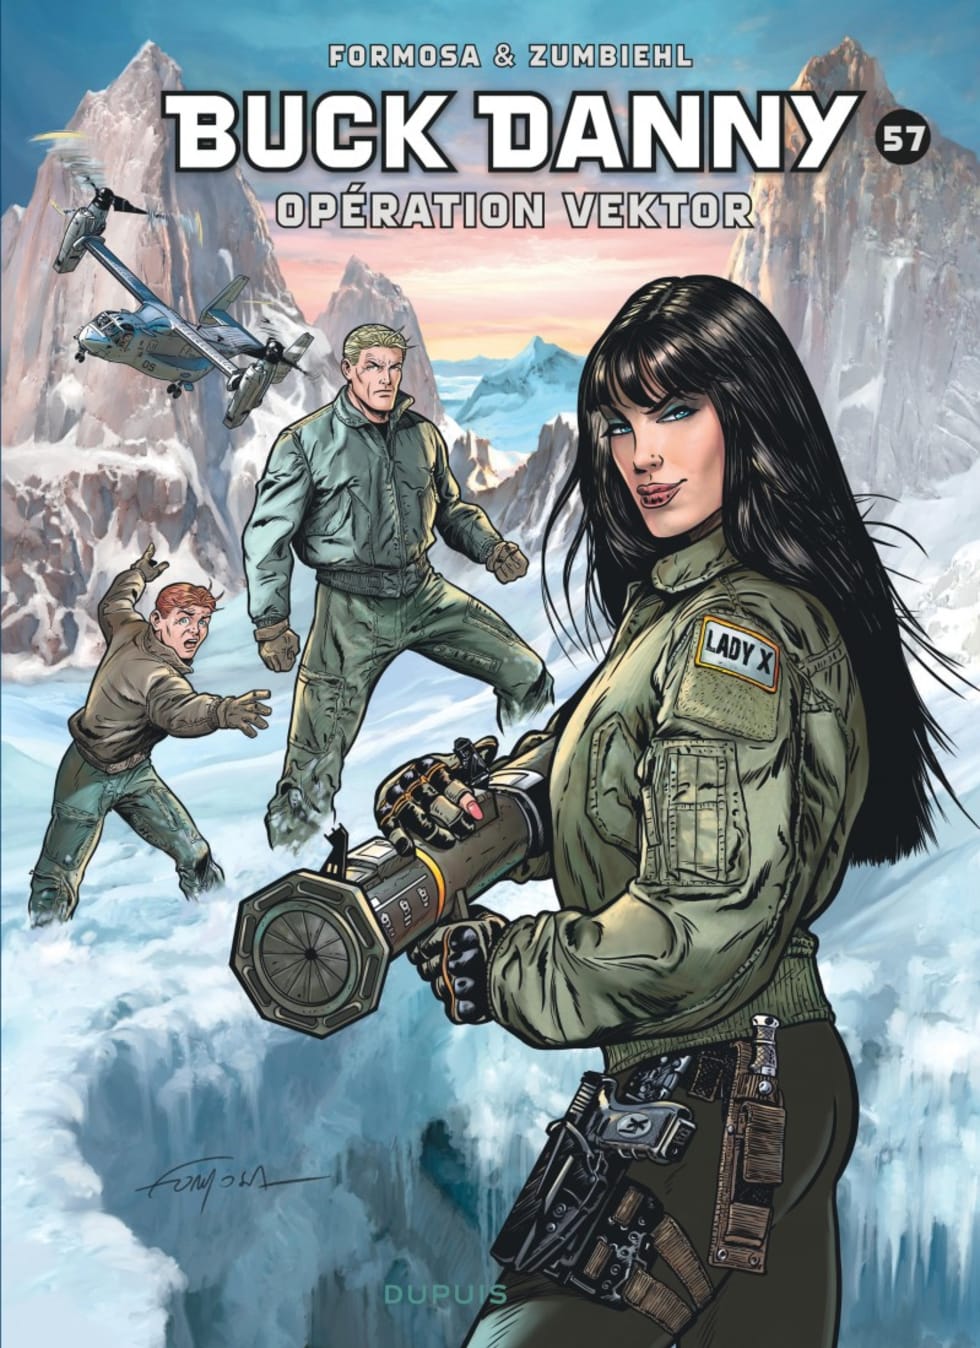 Comic Book – Buck Danny volume 57 "Operation VEKTOR"